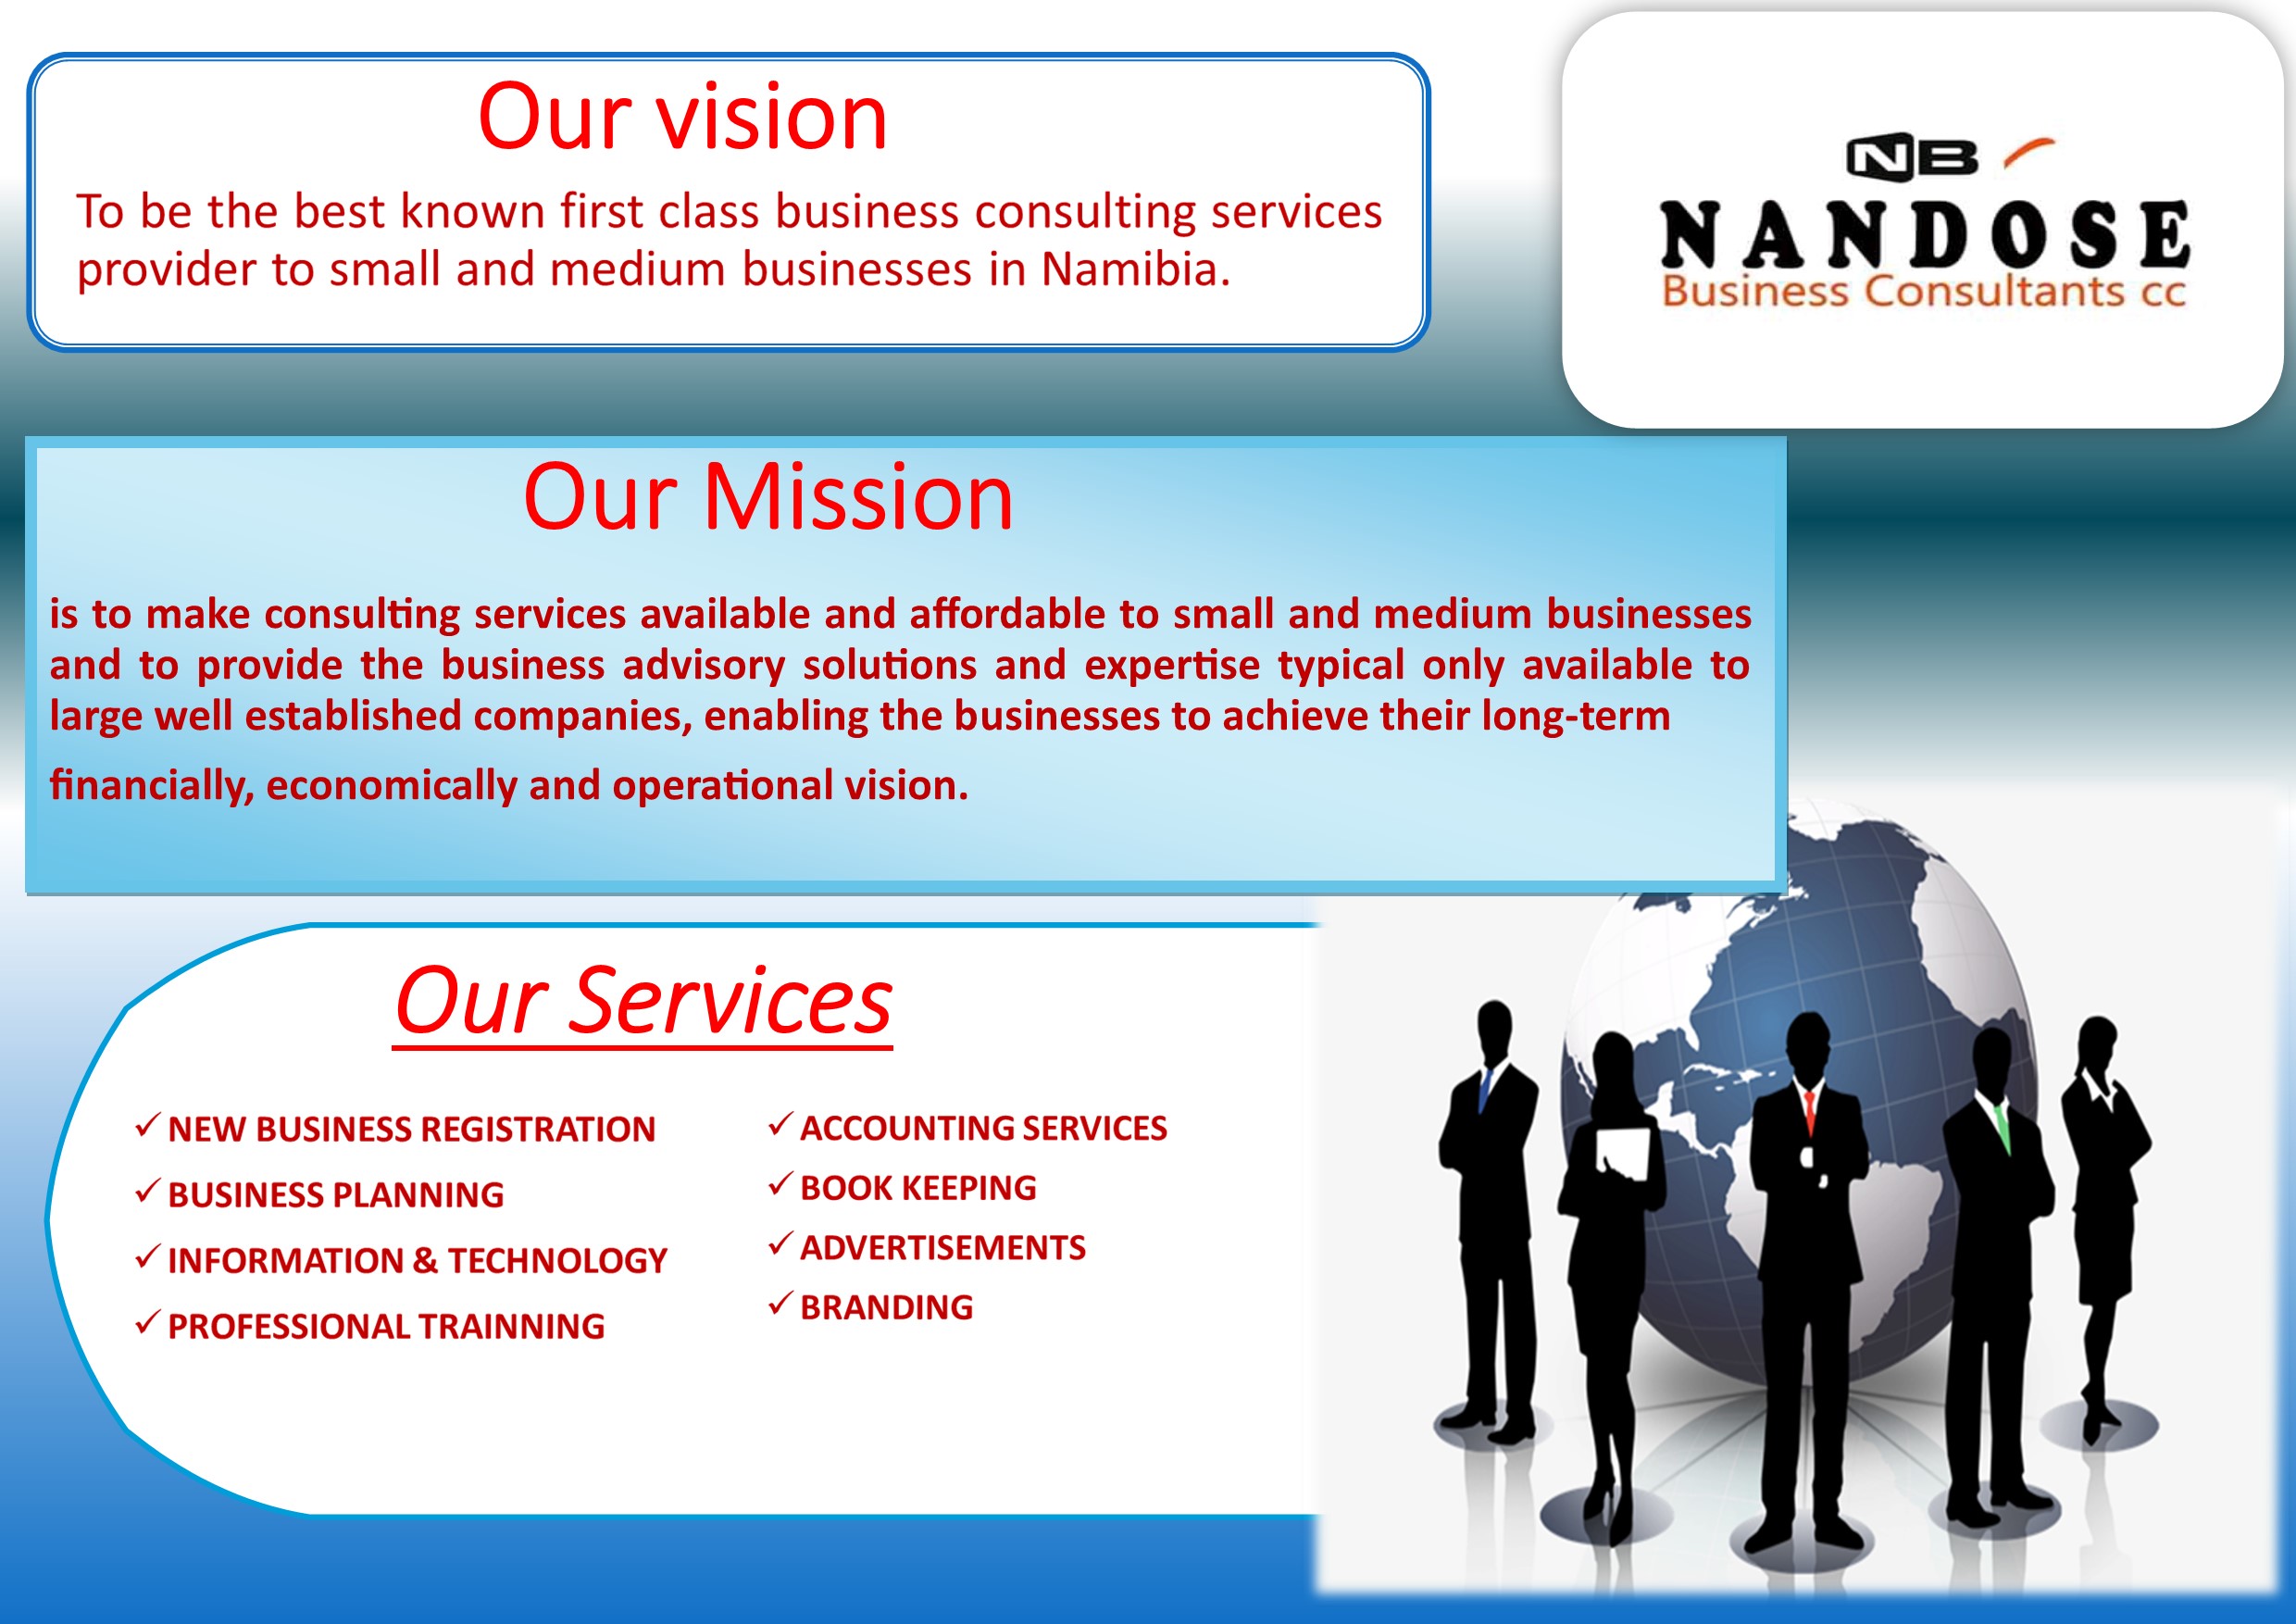 Nandose Business Consultants CC